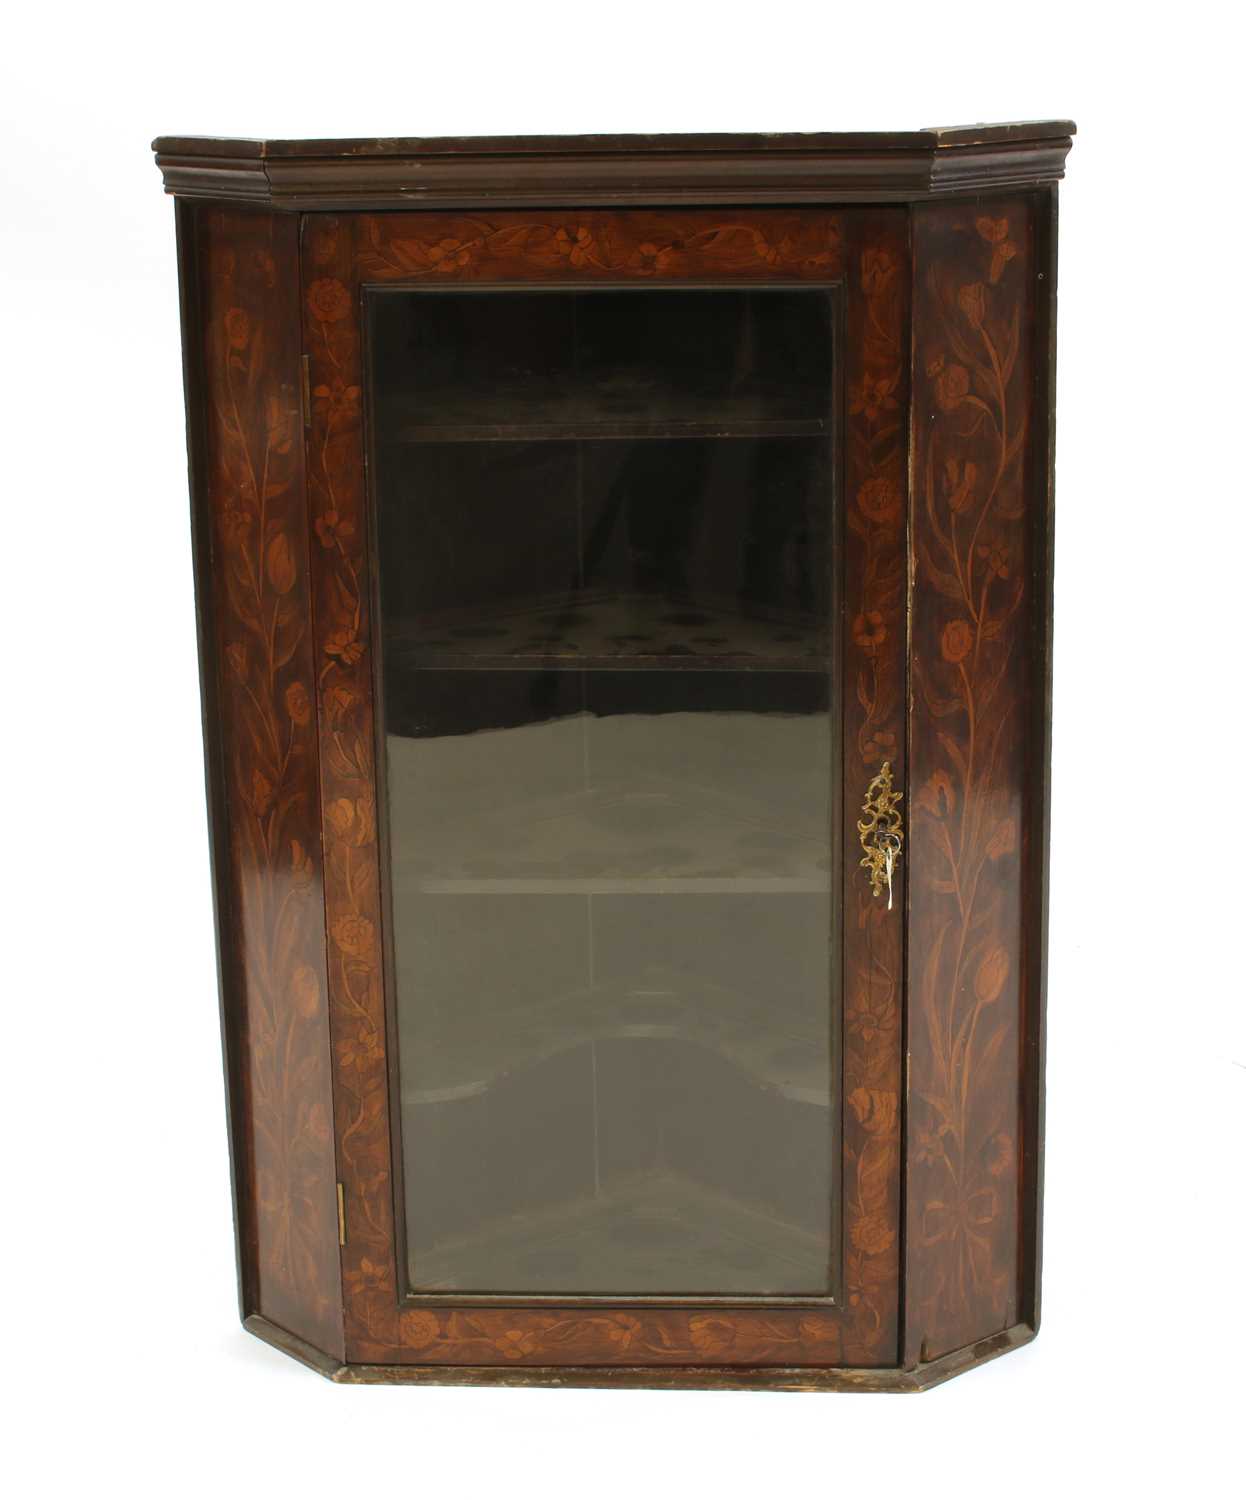 Lot 298 - A 19th century inlaid corner cabinet